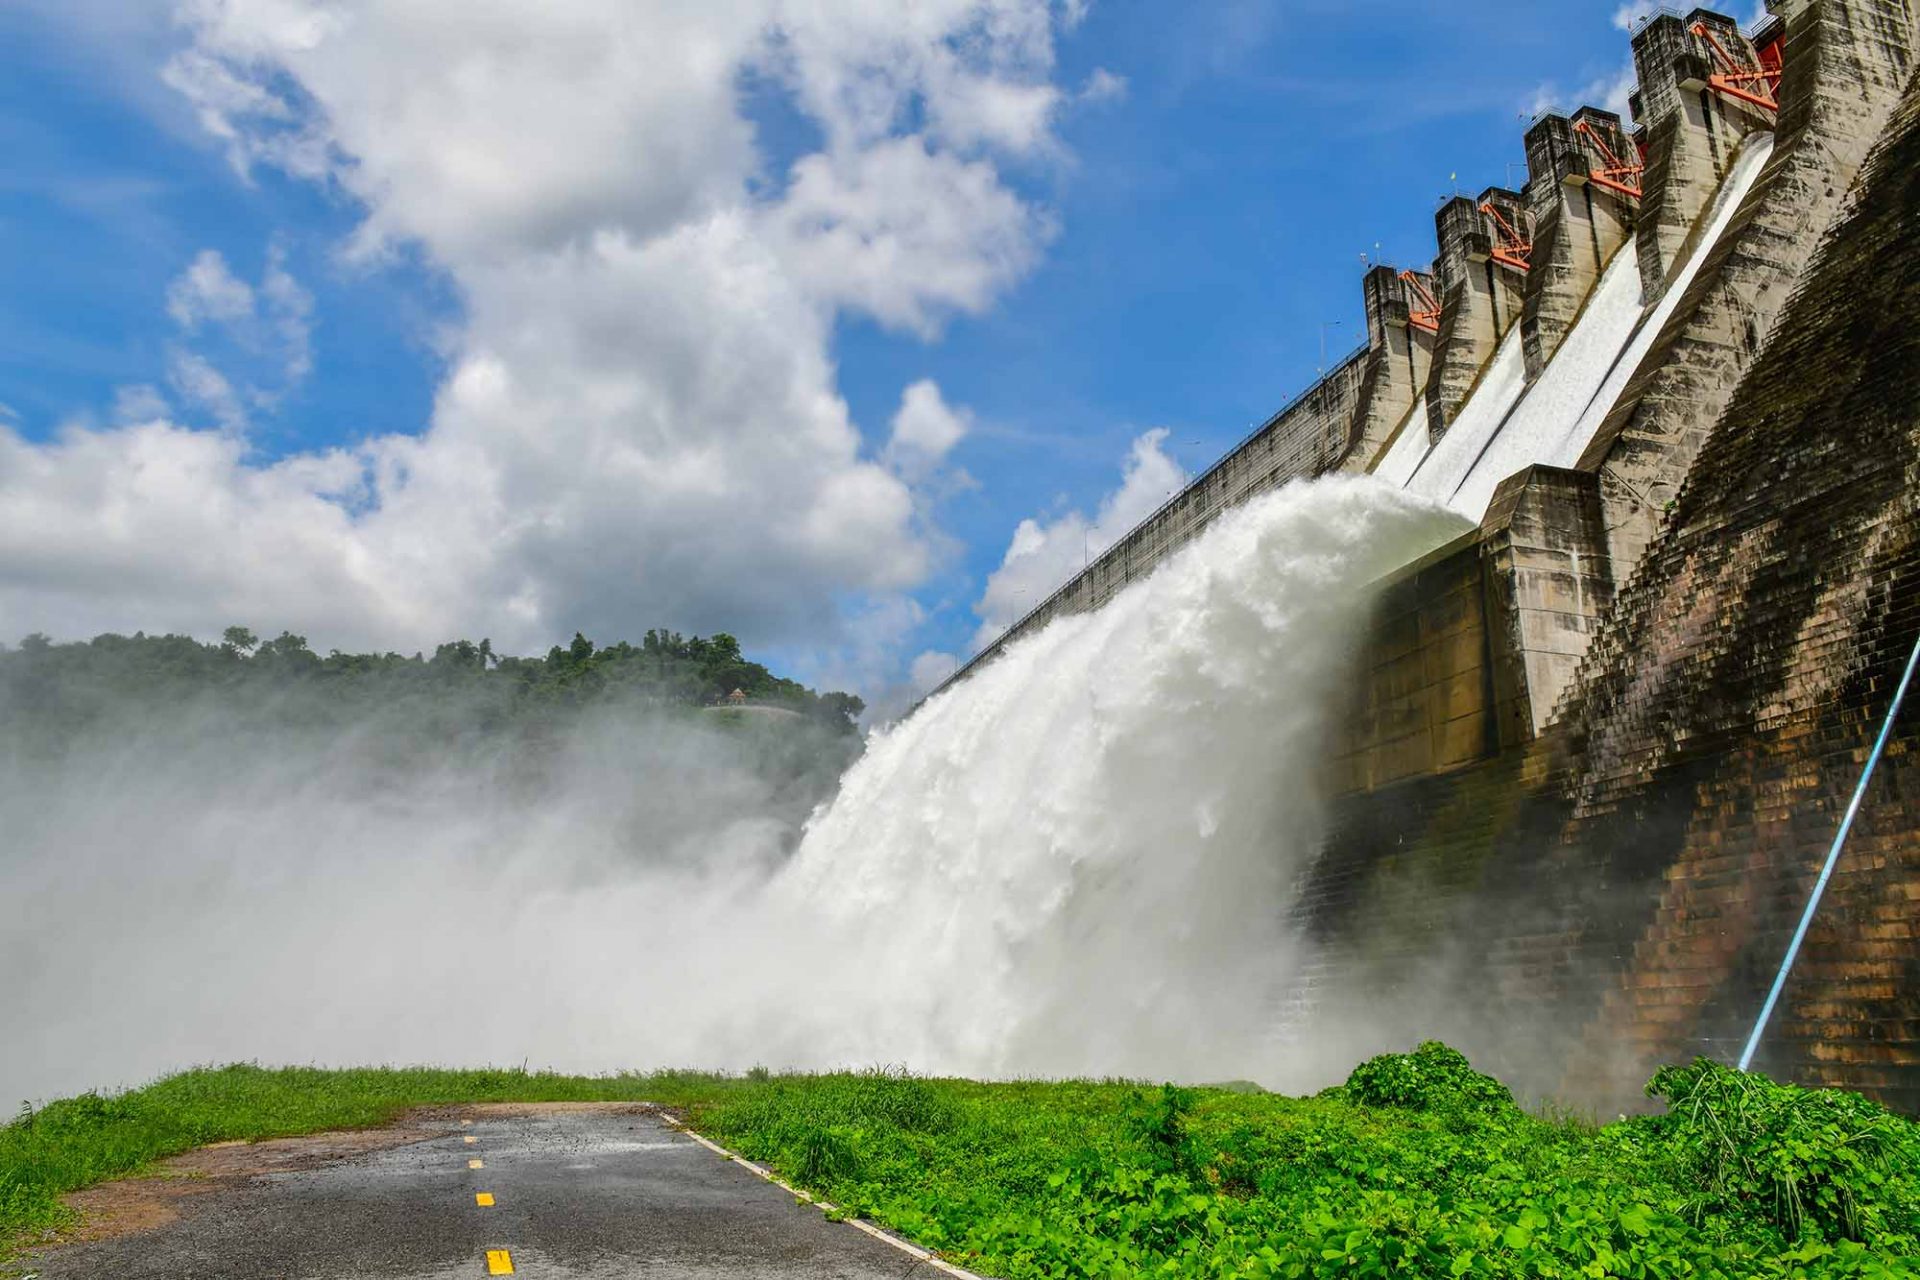 The Dam Khun Dan Prakarn Chon Is A Dam With Hydroelectric Power